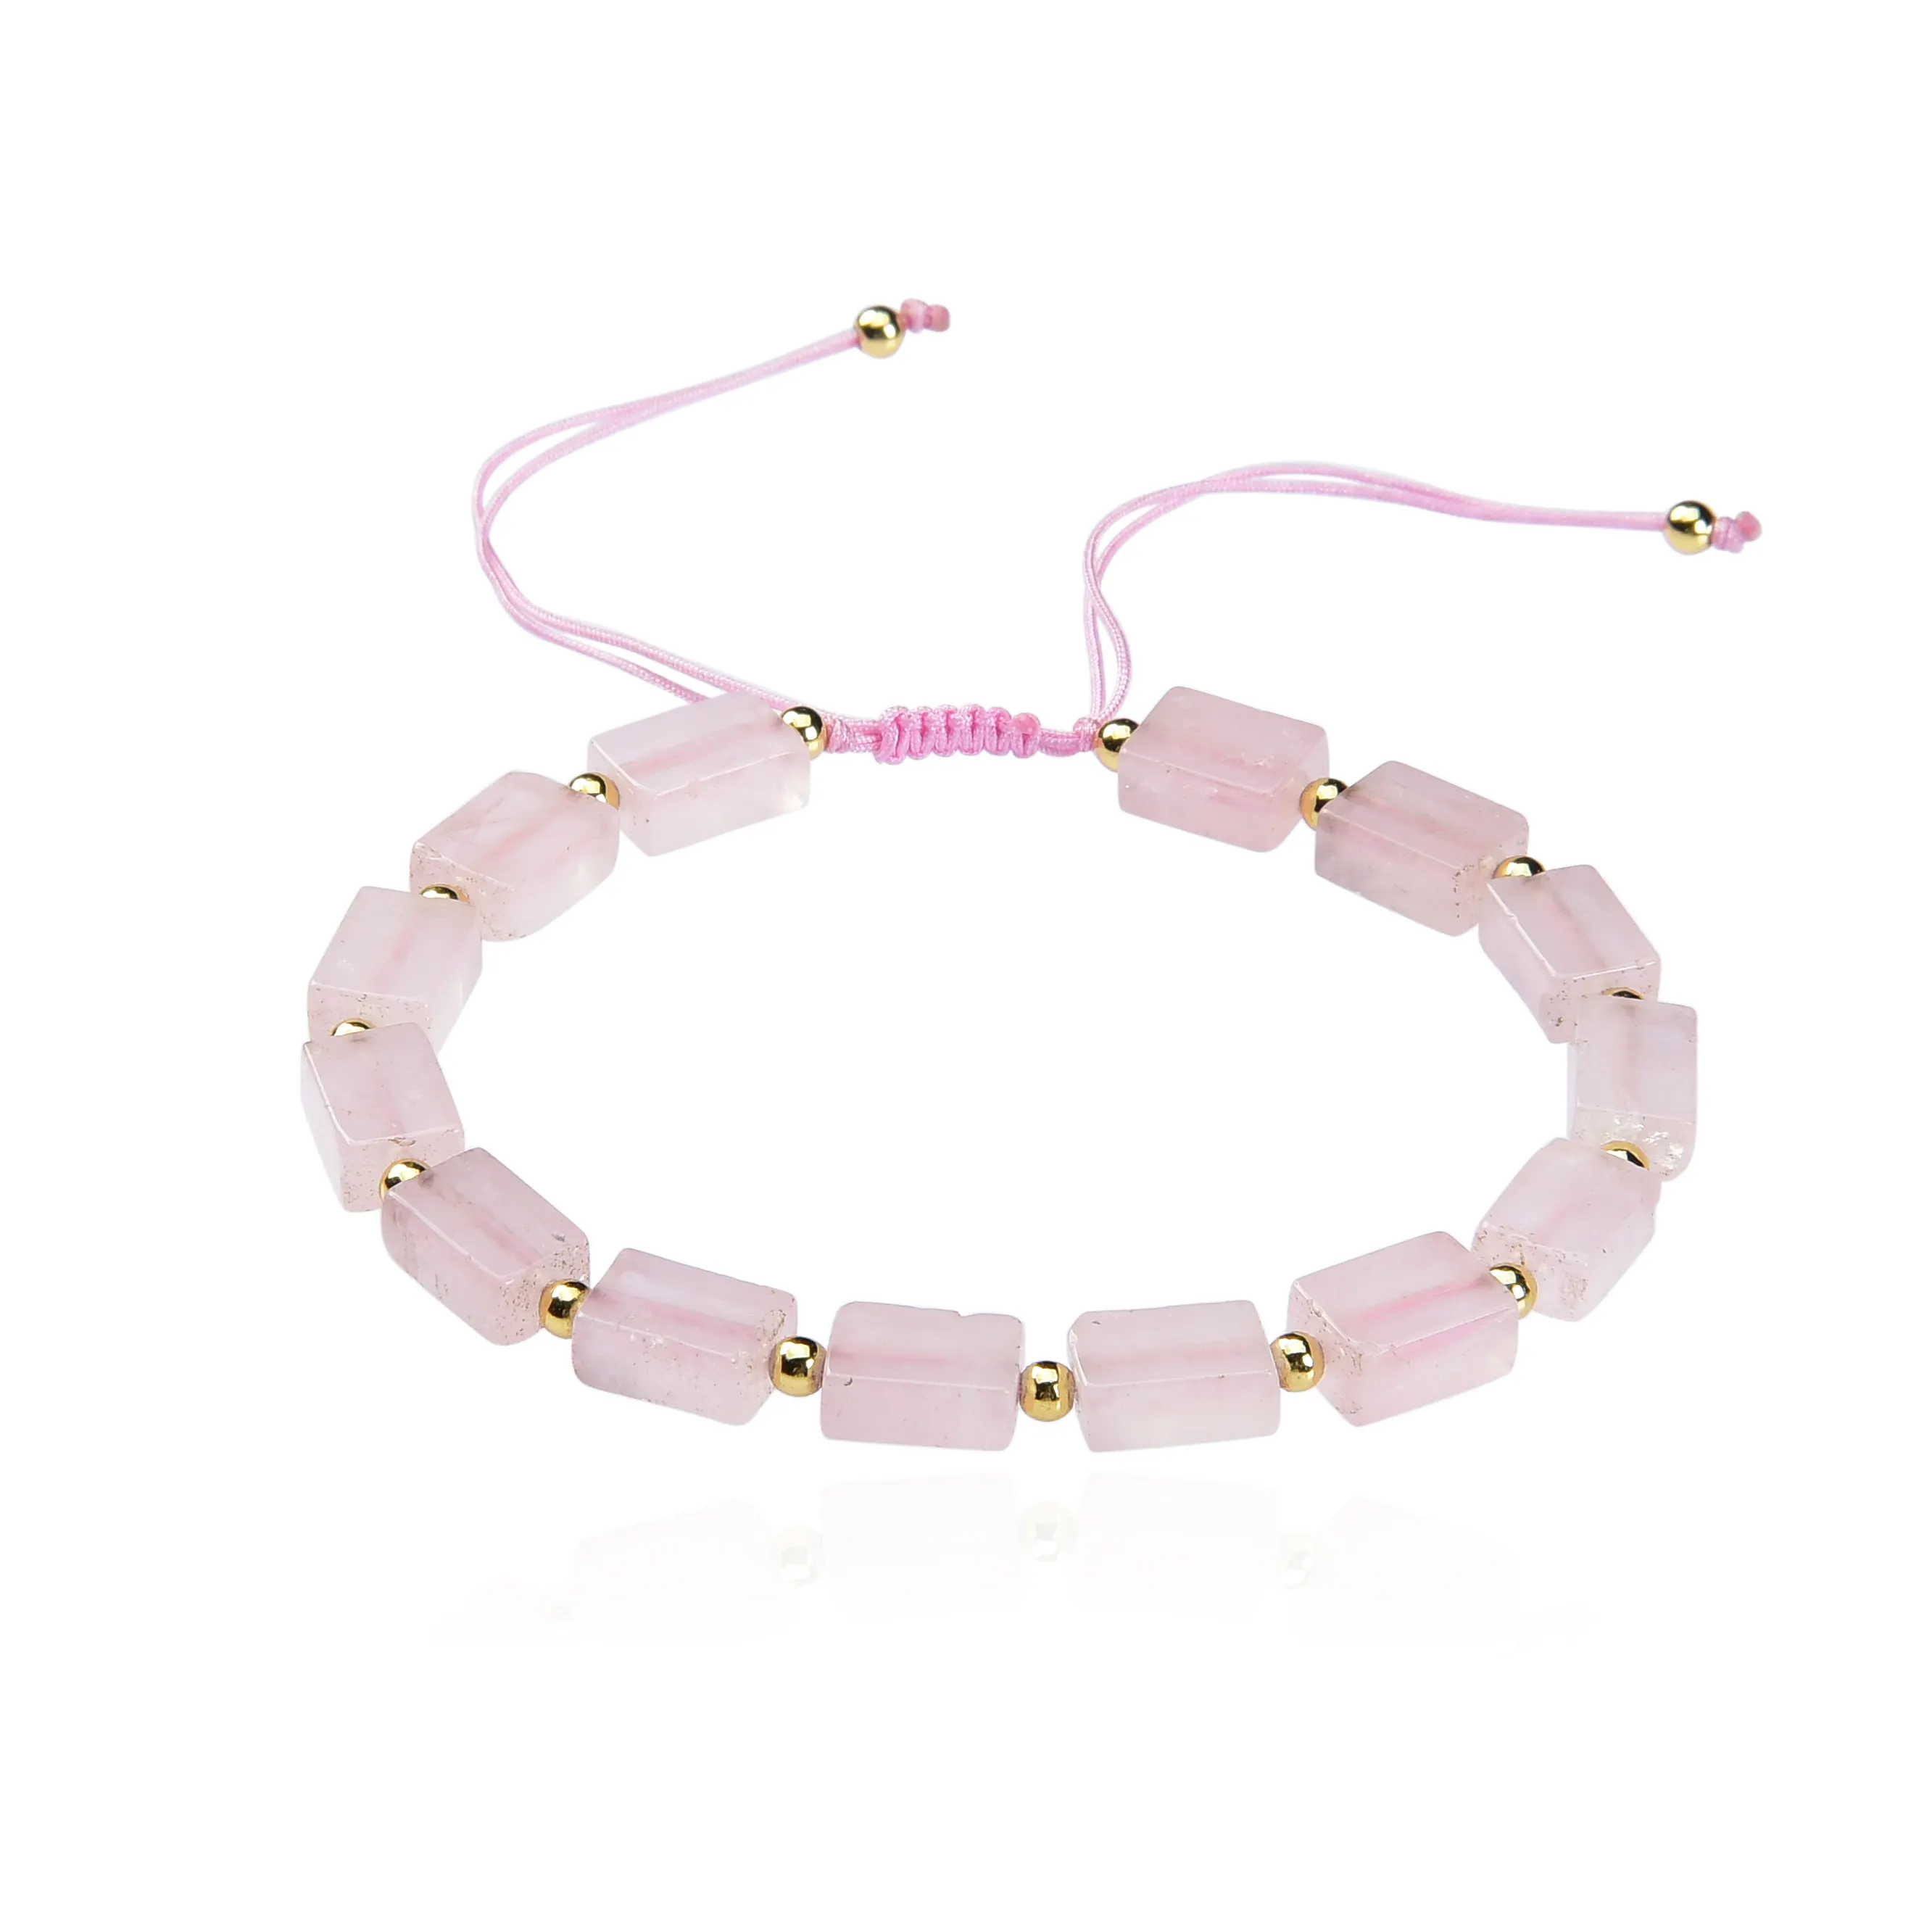 Handmade braided adjustable natural stone pink quartz beads with 4mm copper 16k gold beads women bracelet